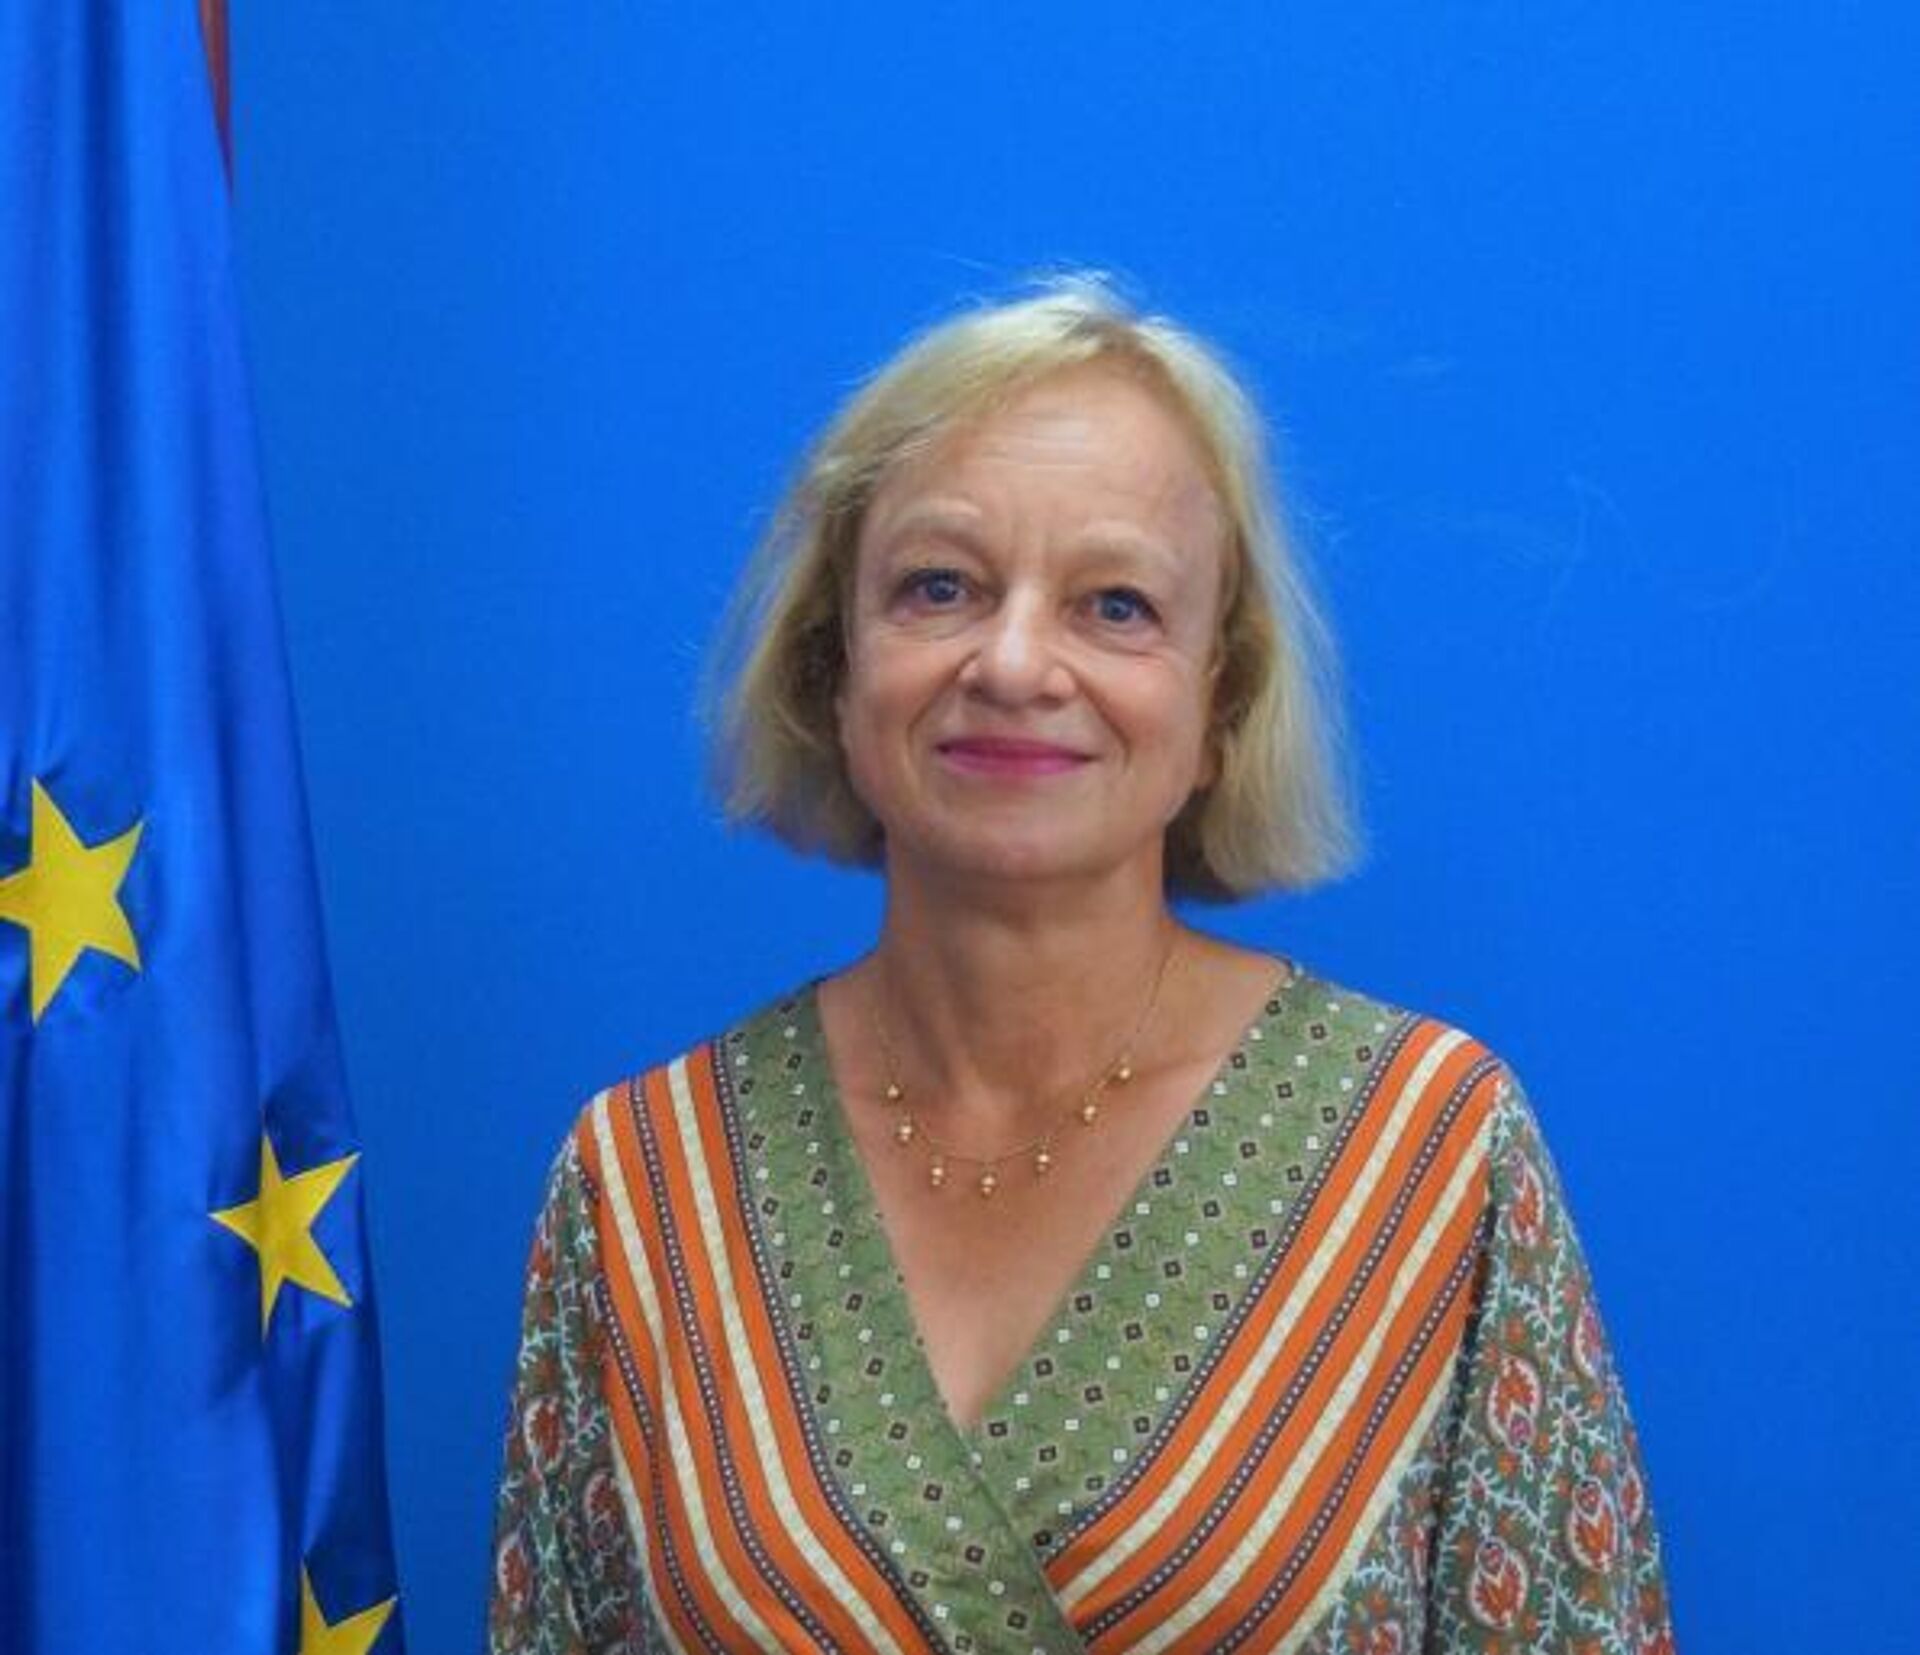 Bettina Muscheidt, ambassador of the European Union in Nicaragua. - Sputnik International, 1920, 28.09.2022